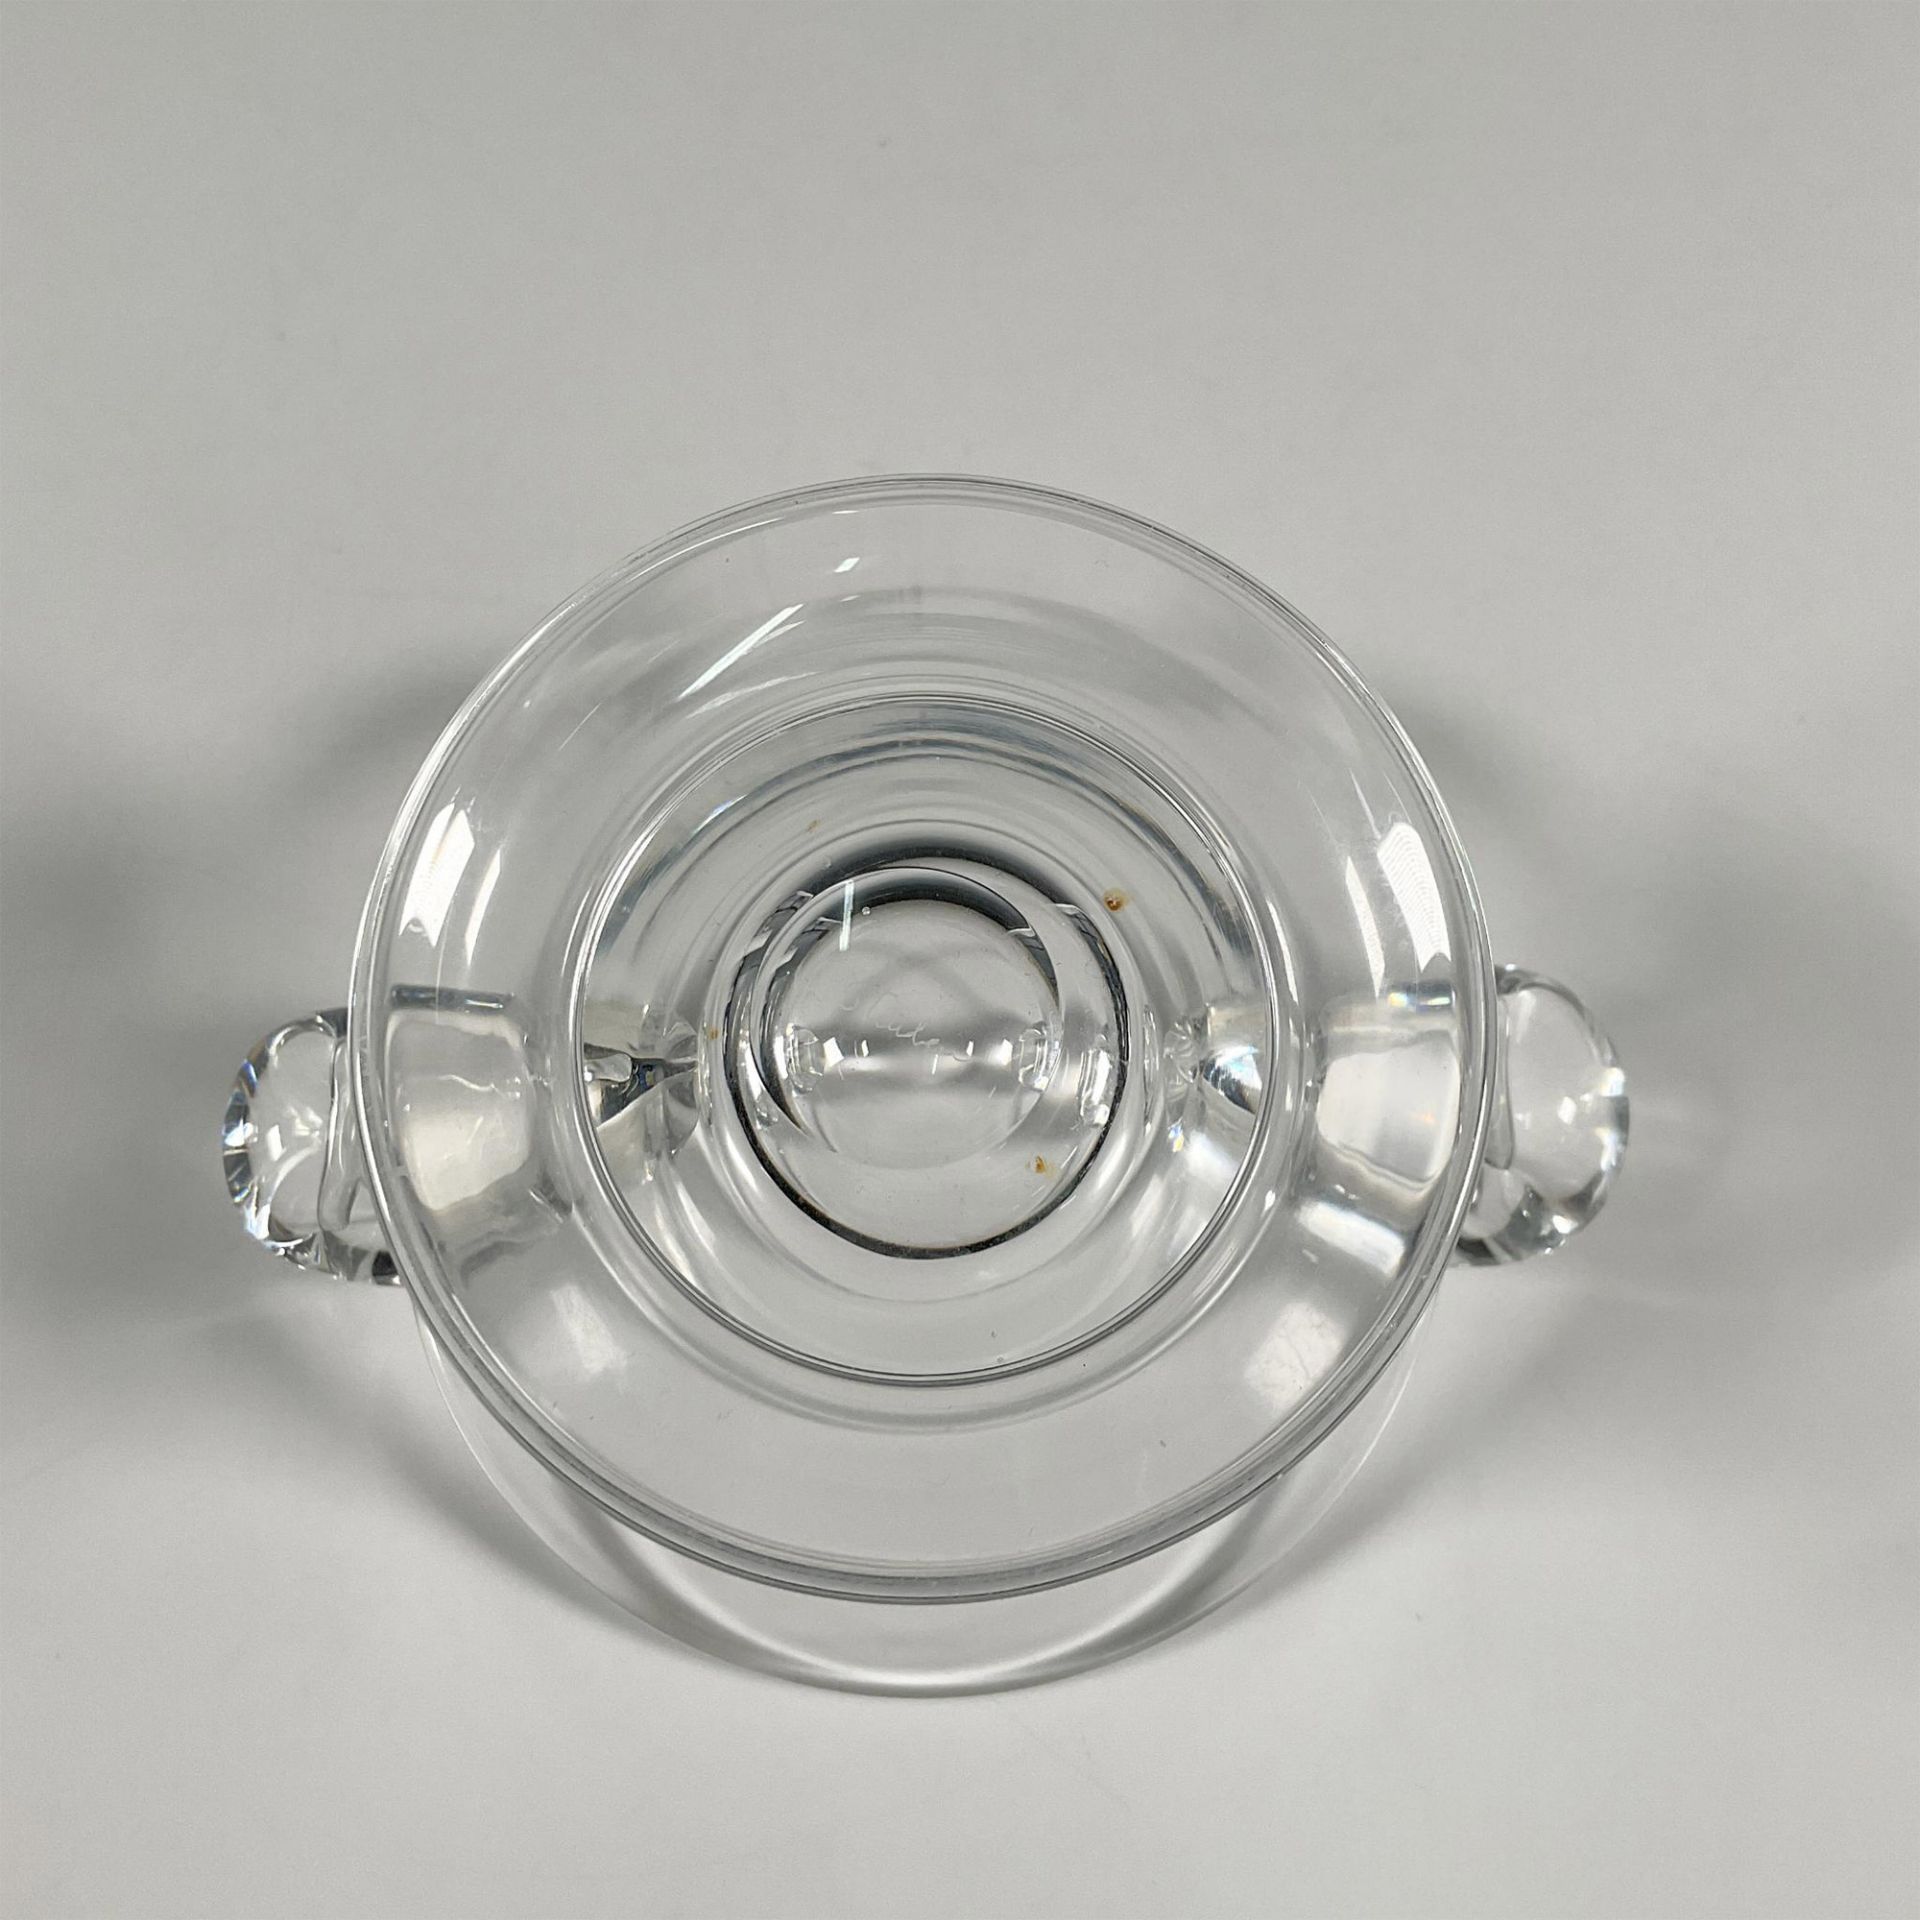 Steuben Art Glass Snail Scroll Bowl - Image 3 of 4